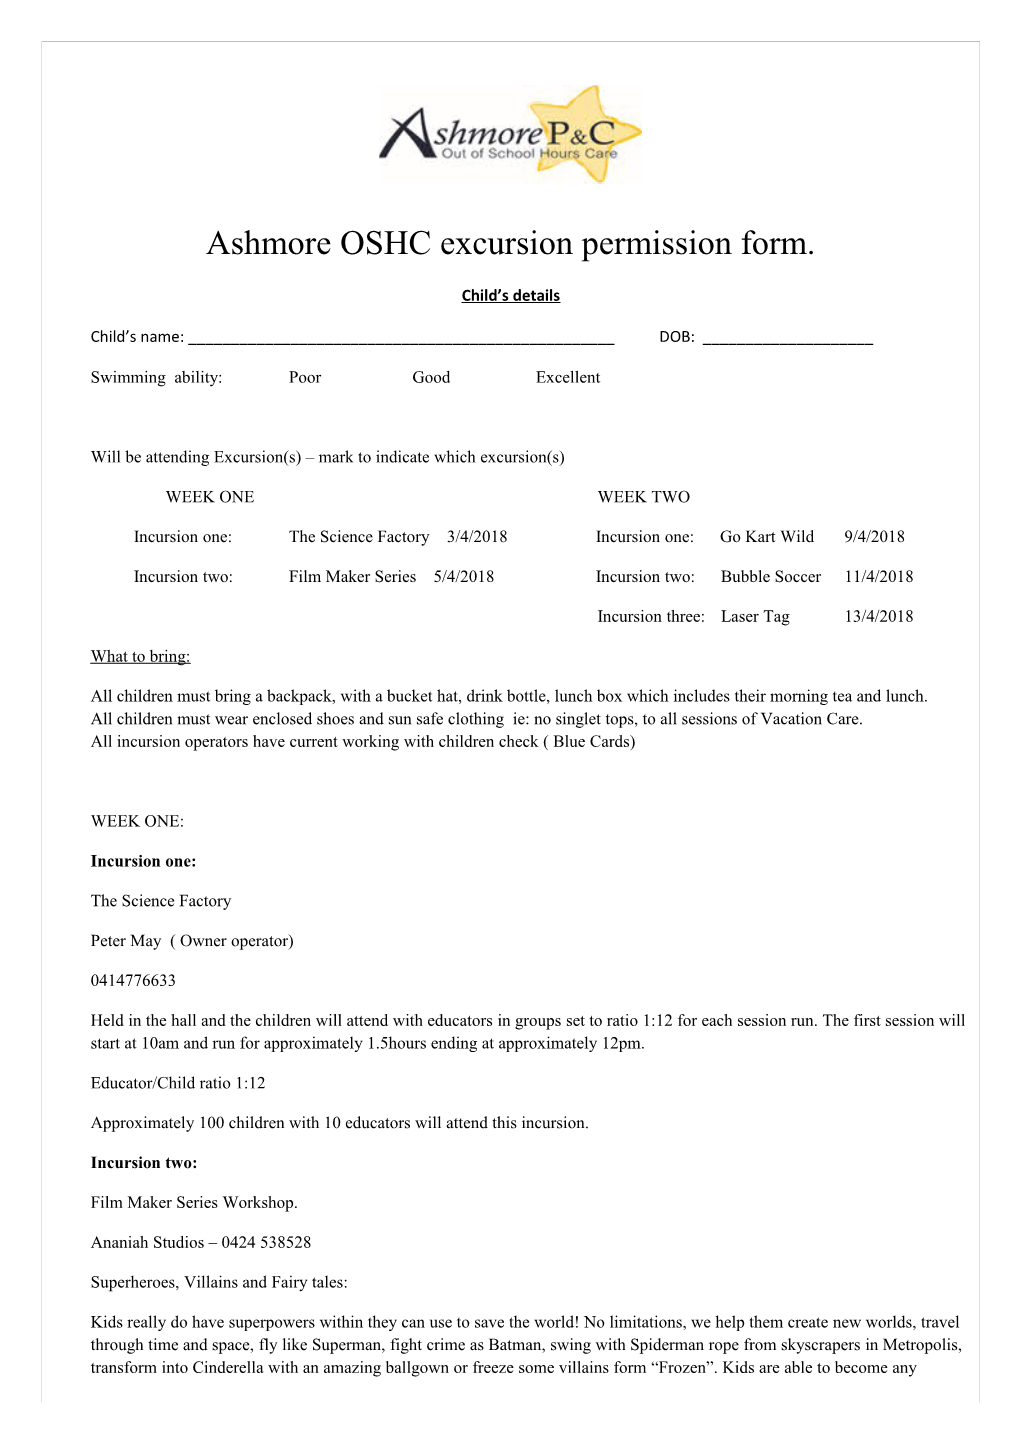 Ashmore OSHC Excursion Permission Form